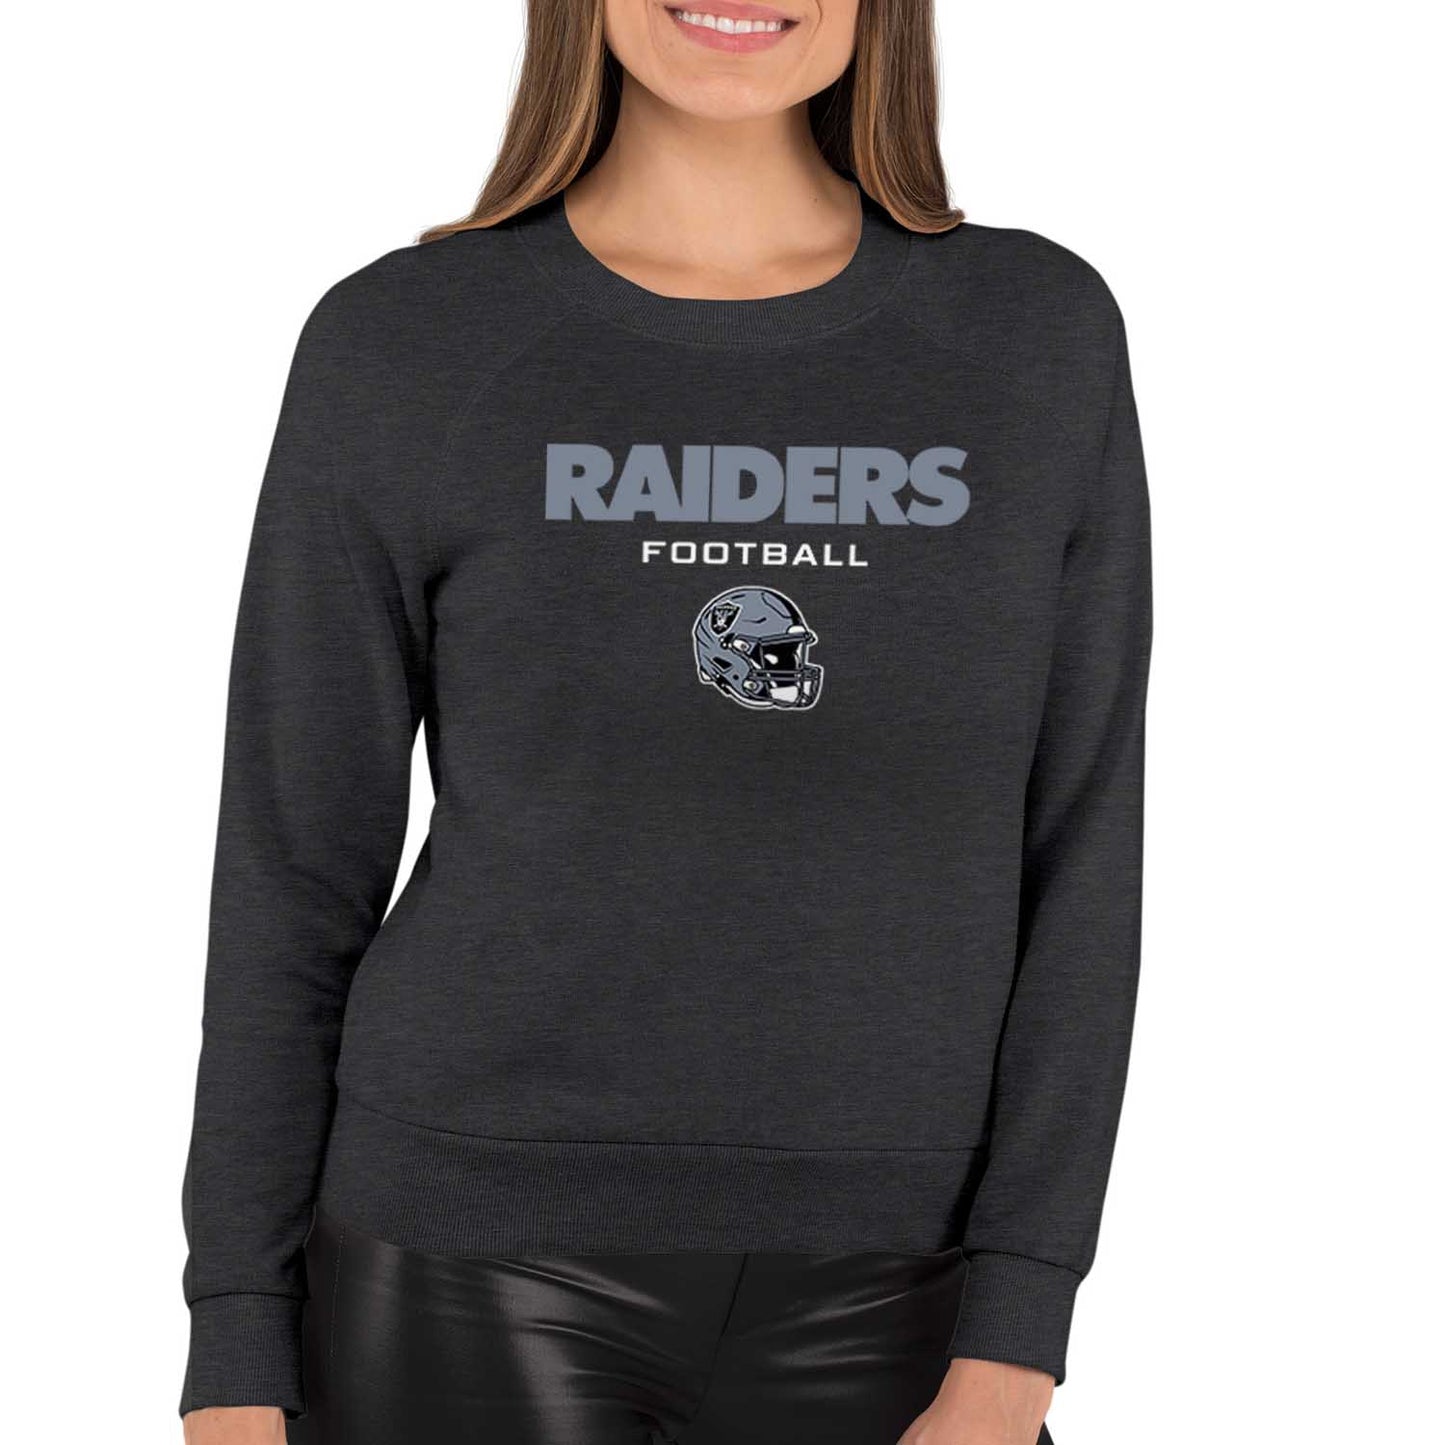 Las Vegas Raiders Women's NFL Football Helmet Charcoal Slouchy Crewneck -Tagless Lightweight Pullover - Charcoal